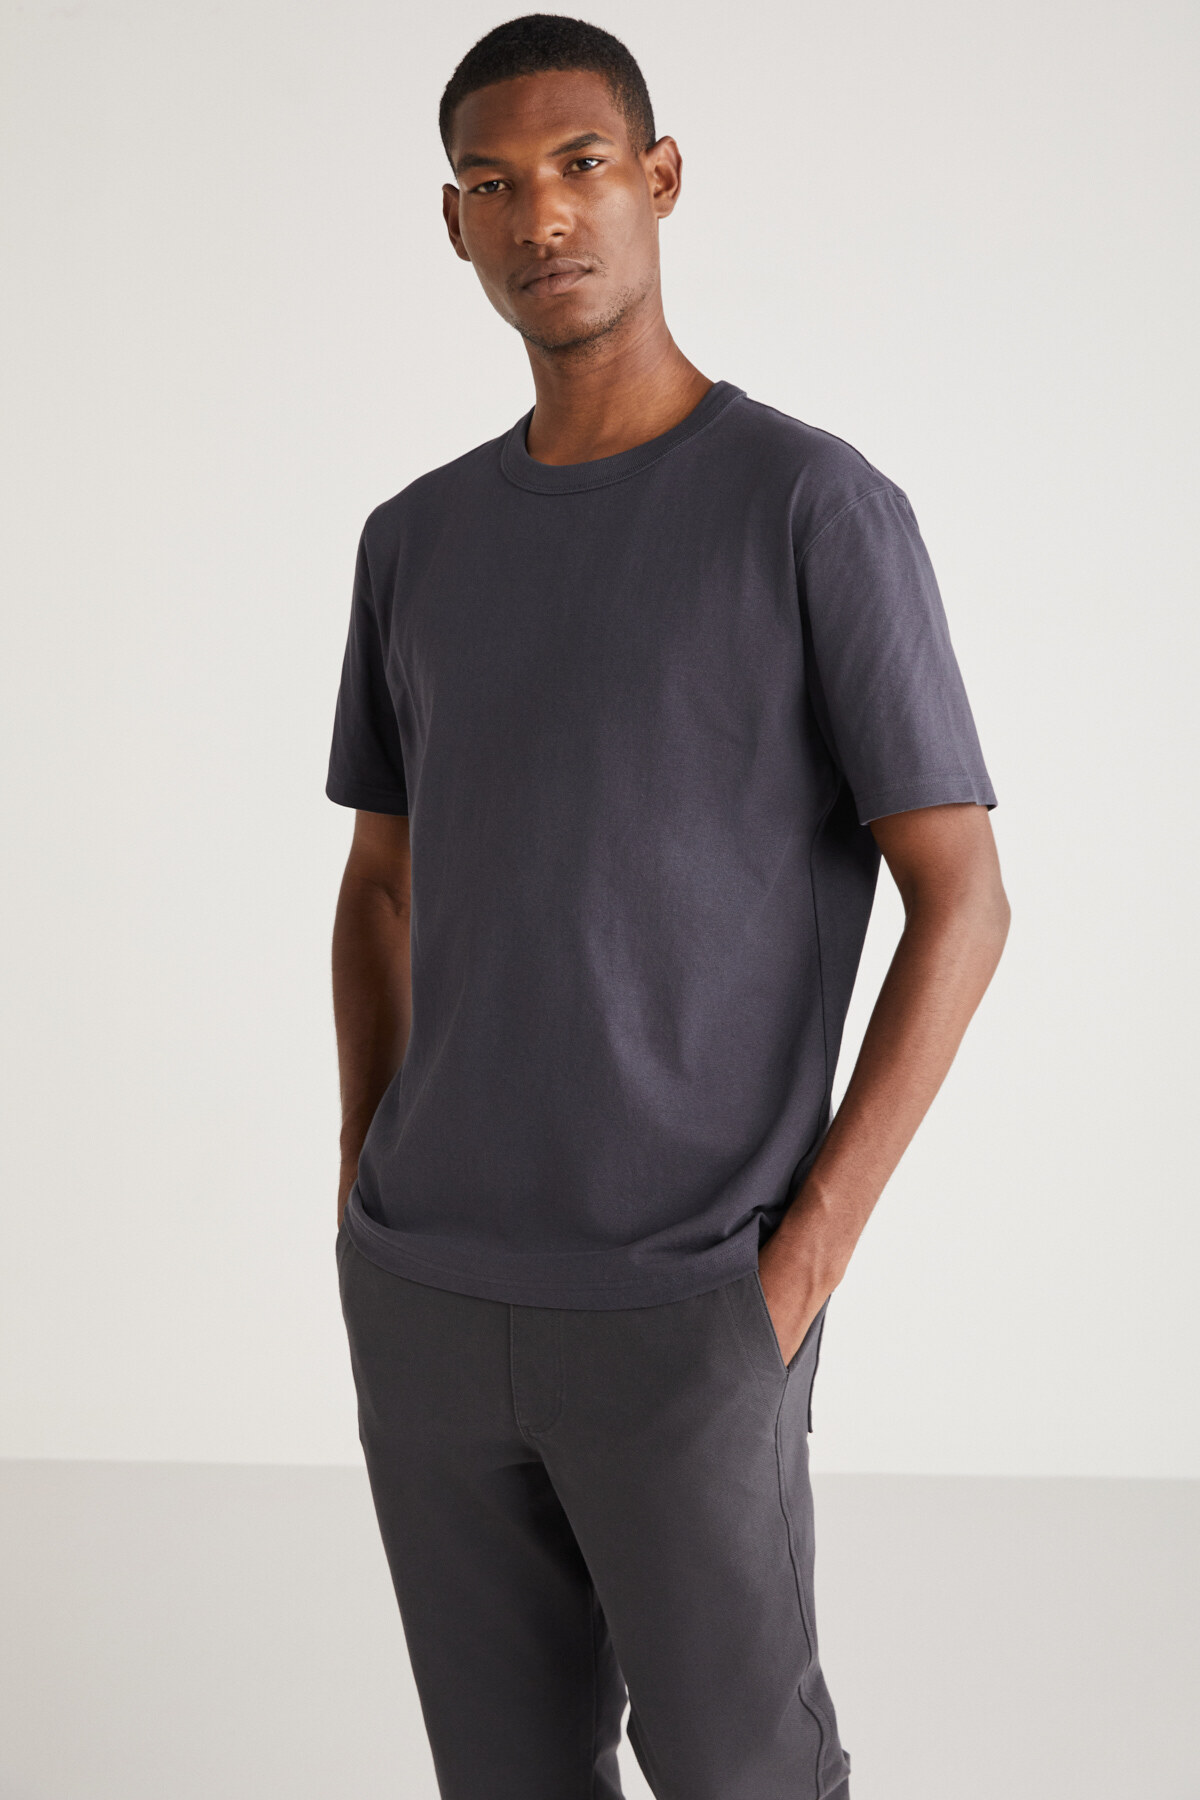 Levně GRIMELANGE Astons Men's Comfort Fit Thick Textured Recycle 100% Cotton Dark Gray T-shir